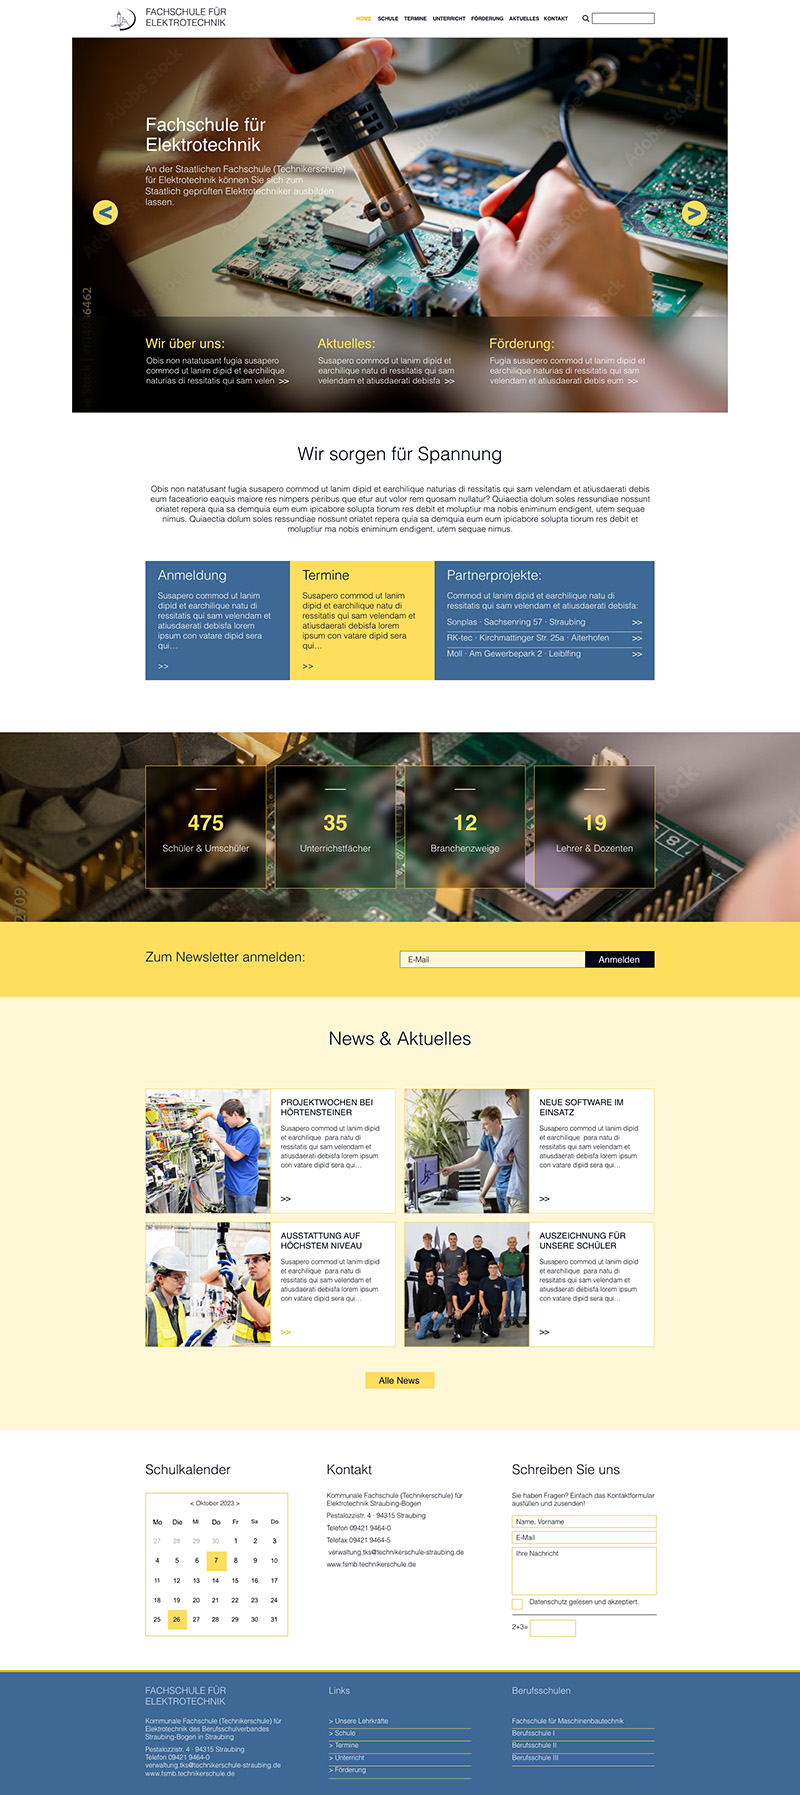 Websitescreenshot: Technikerschule Fachschule für Elektrotechnik